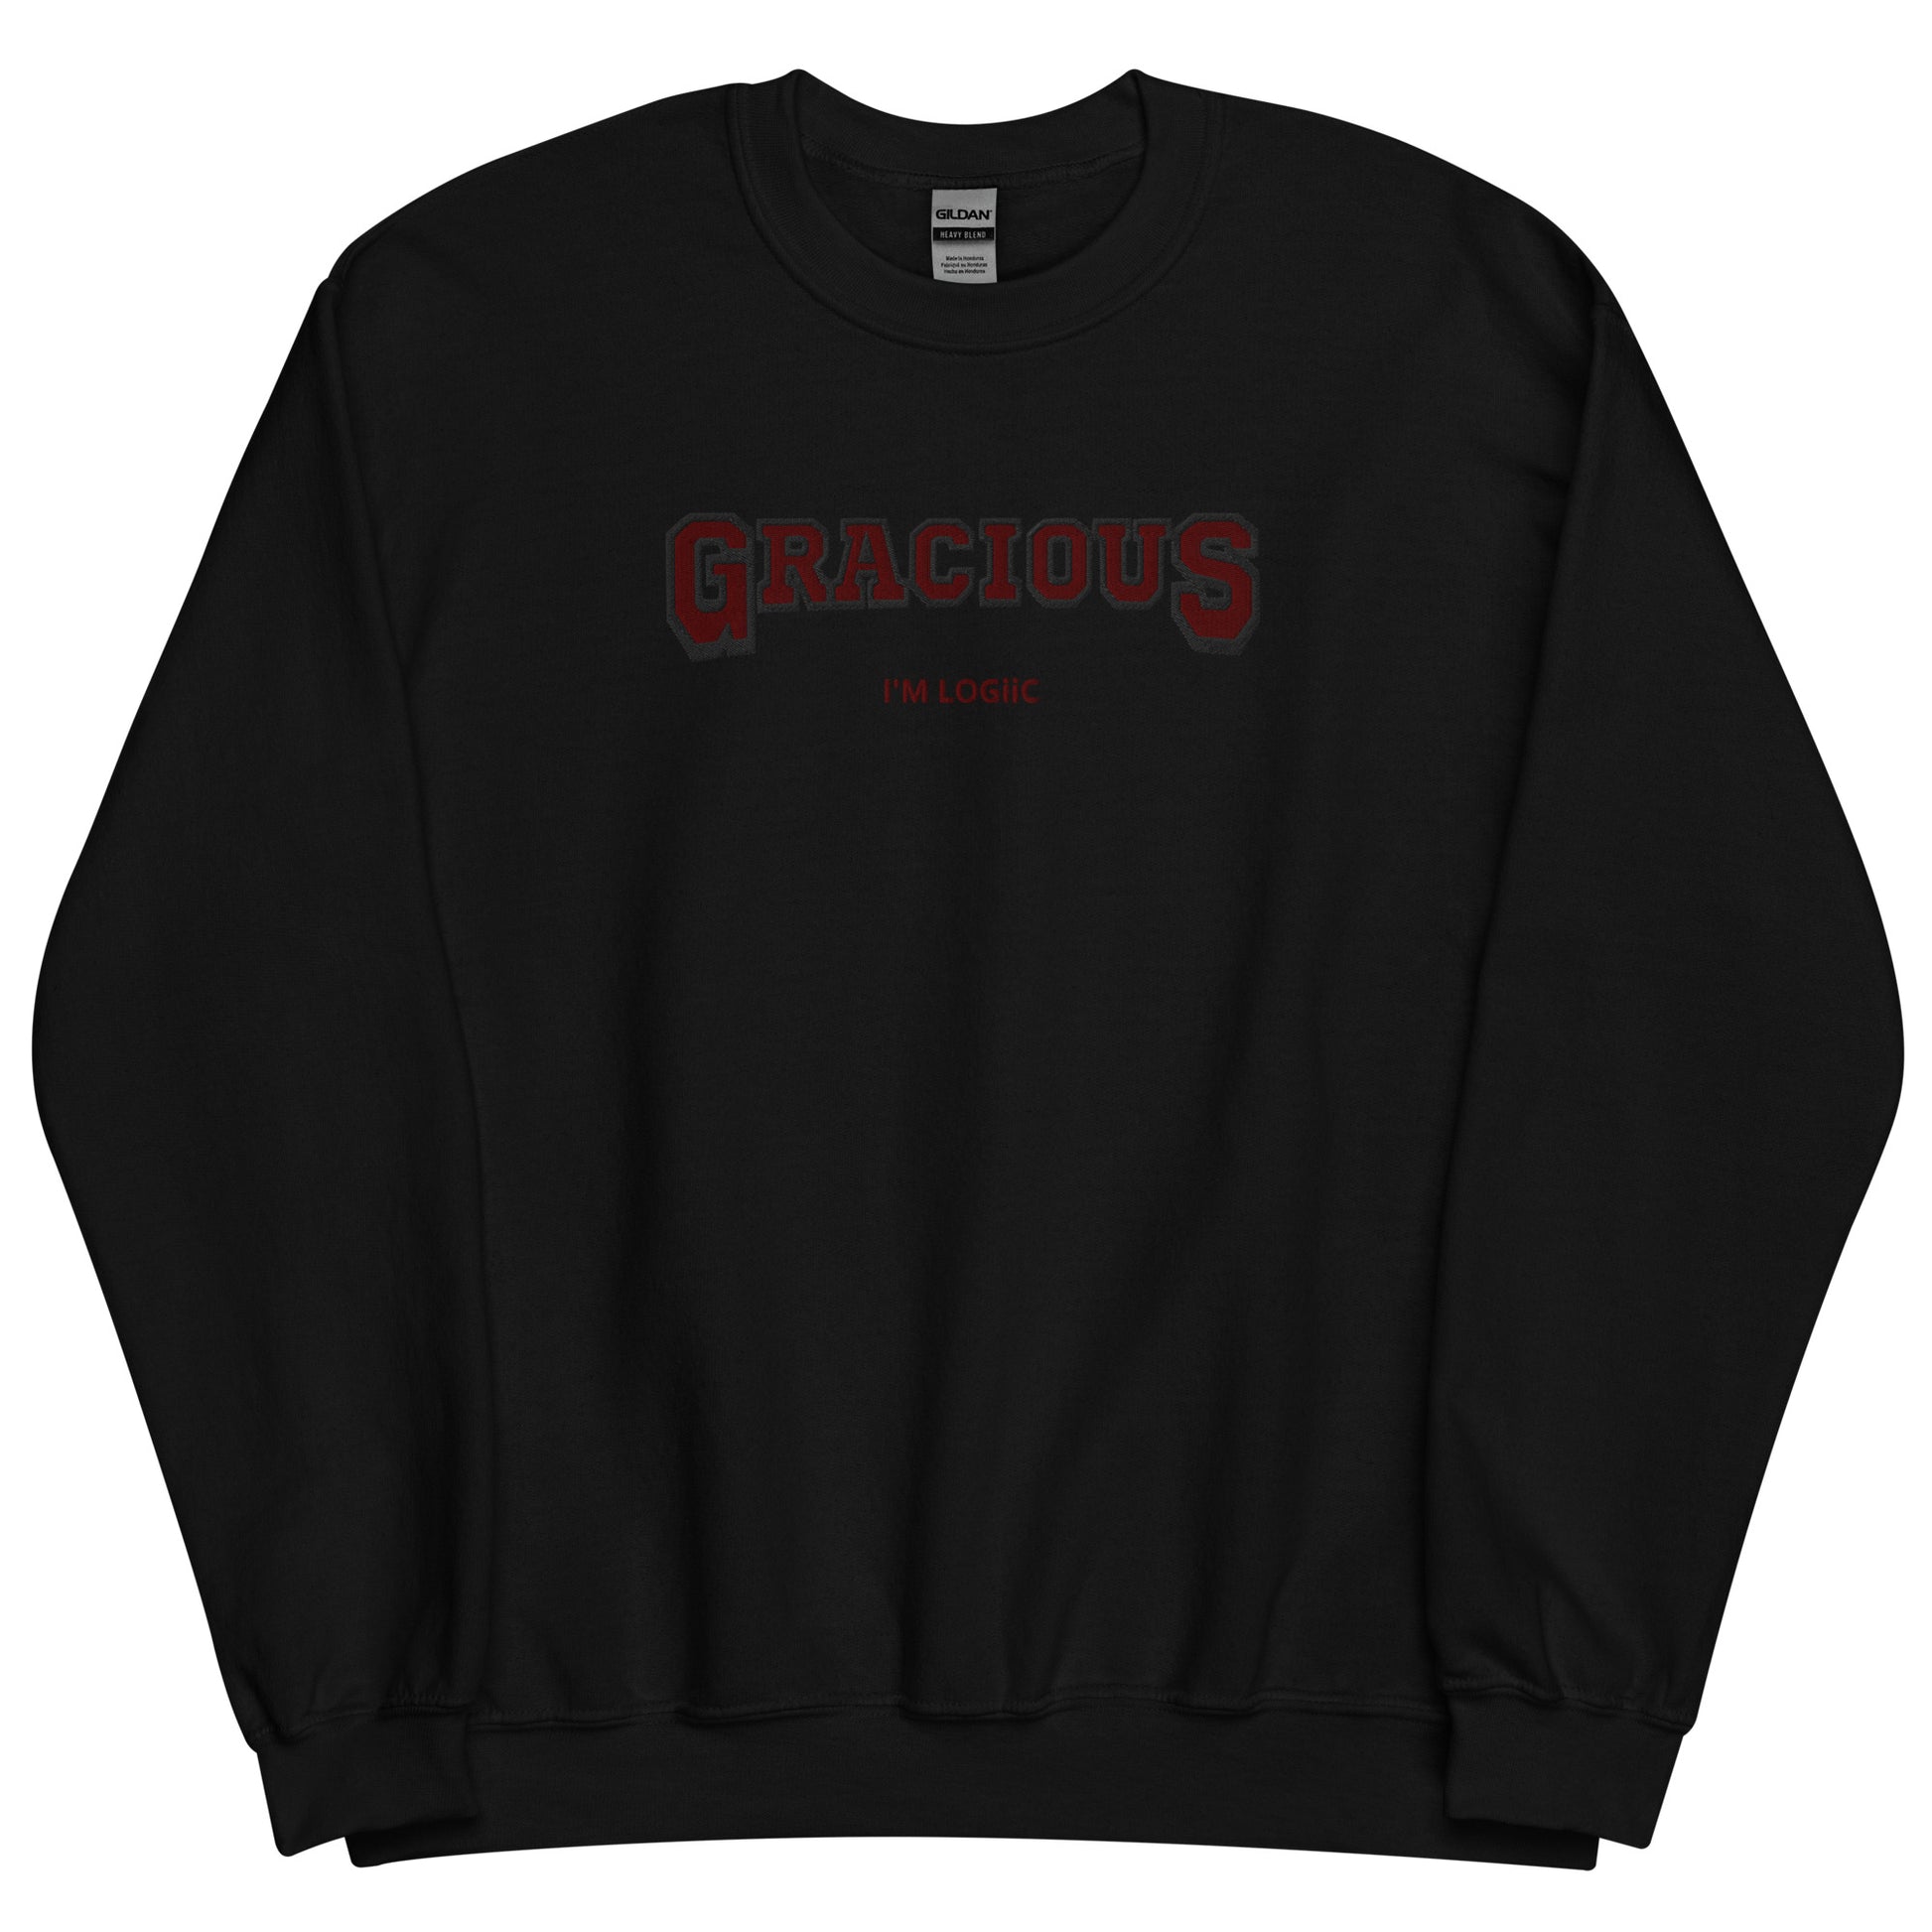 Gracious Unisex Sweatshirt - Black / S